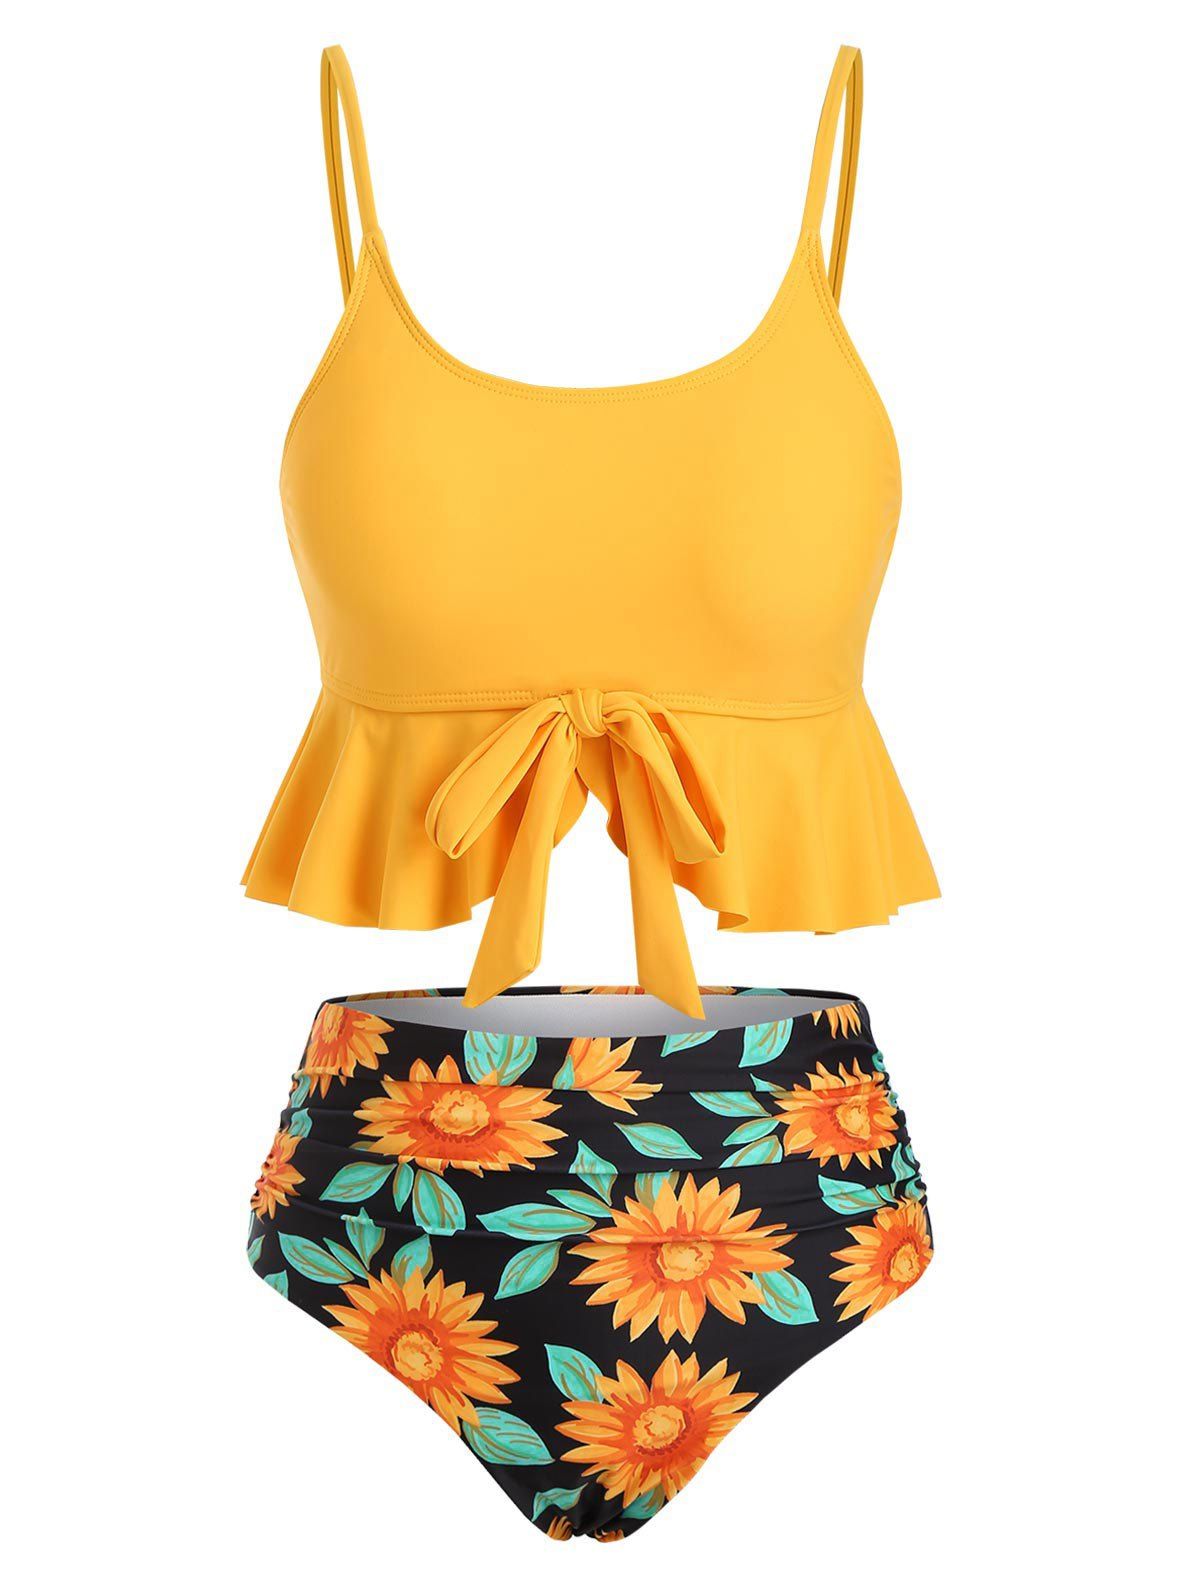 Bright Swimsuit Sunflower Floral Print Knot Ruched Ruffled Tankini Swimwear - YELLOW S